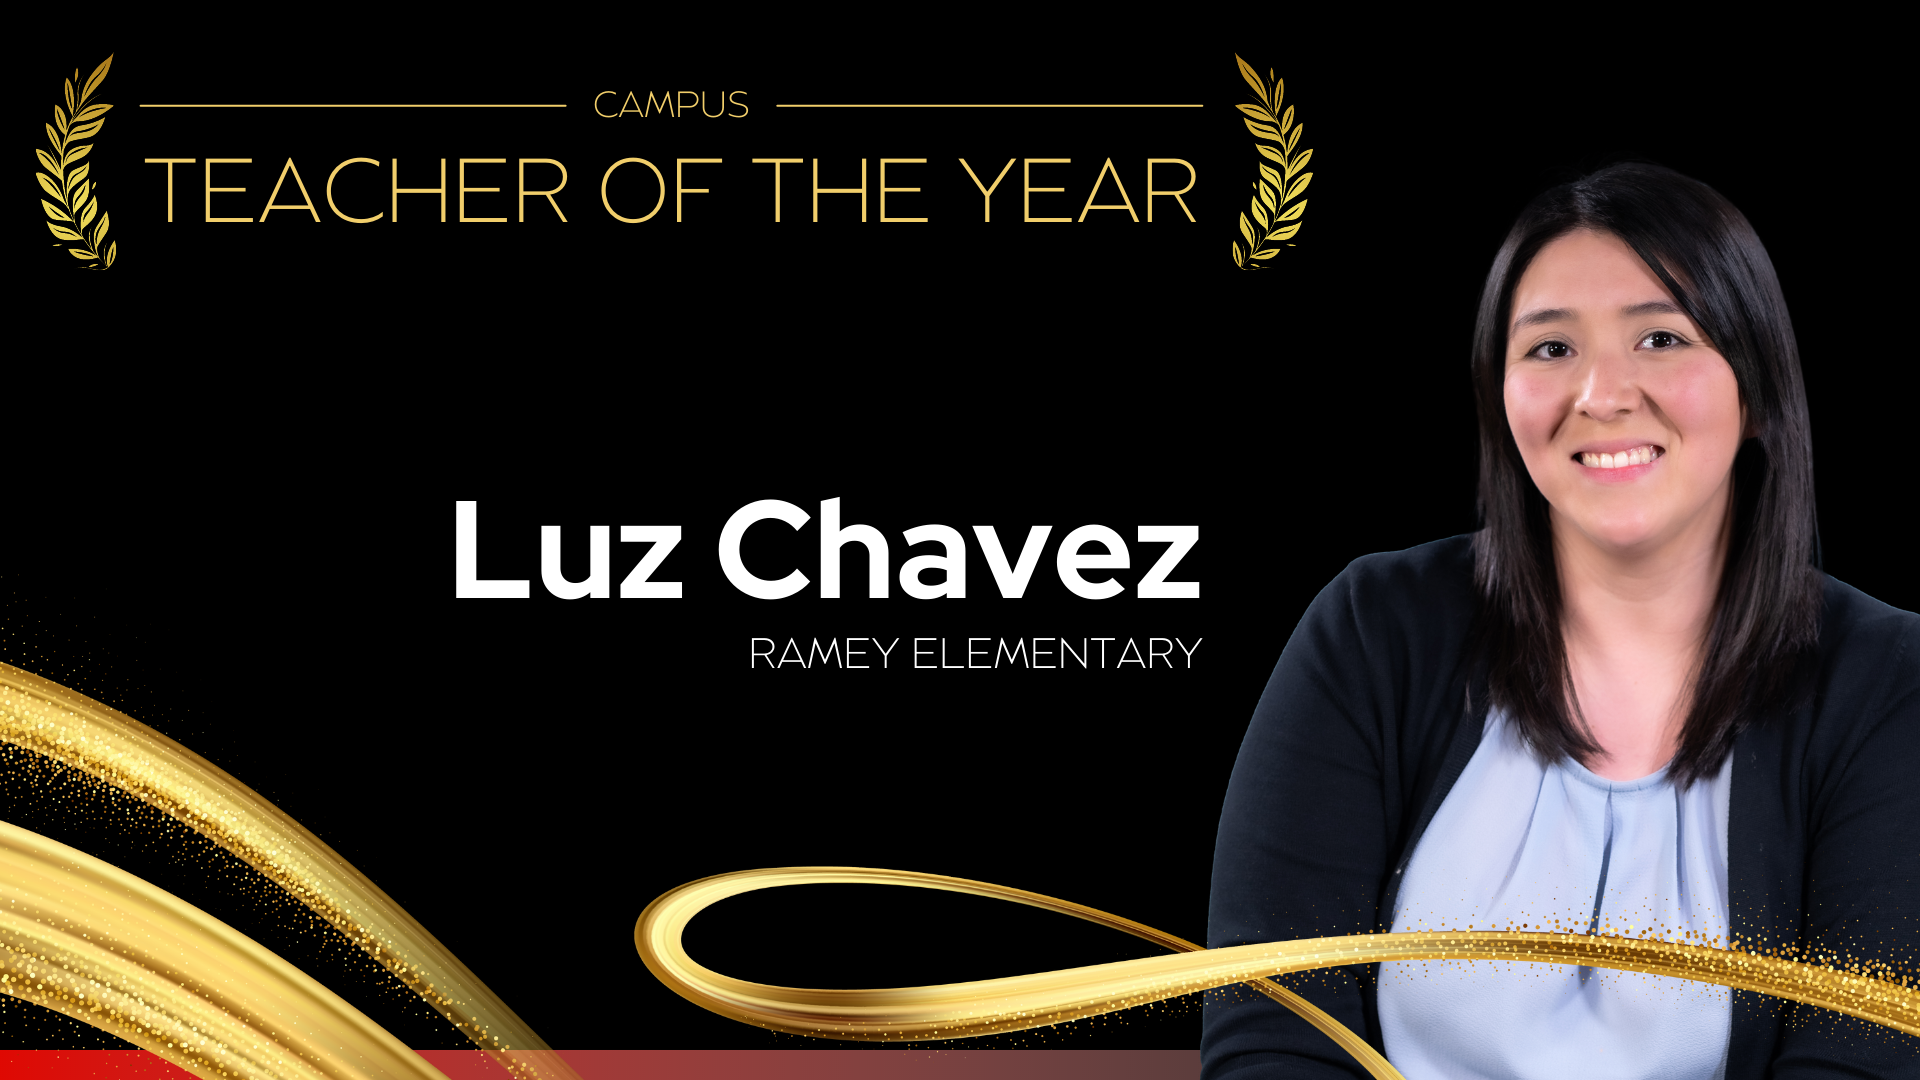 Campus Teacher of the Year Ramey Elementary School - Luz Chavez  